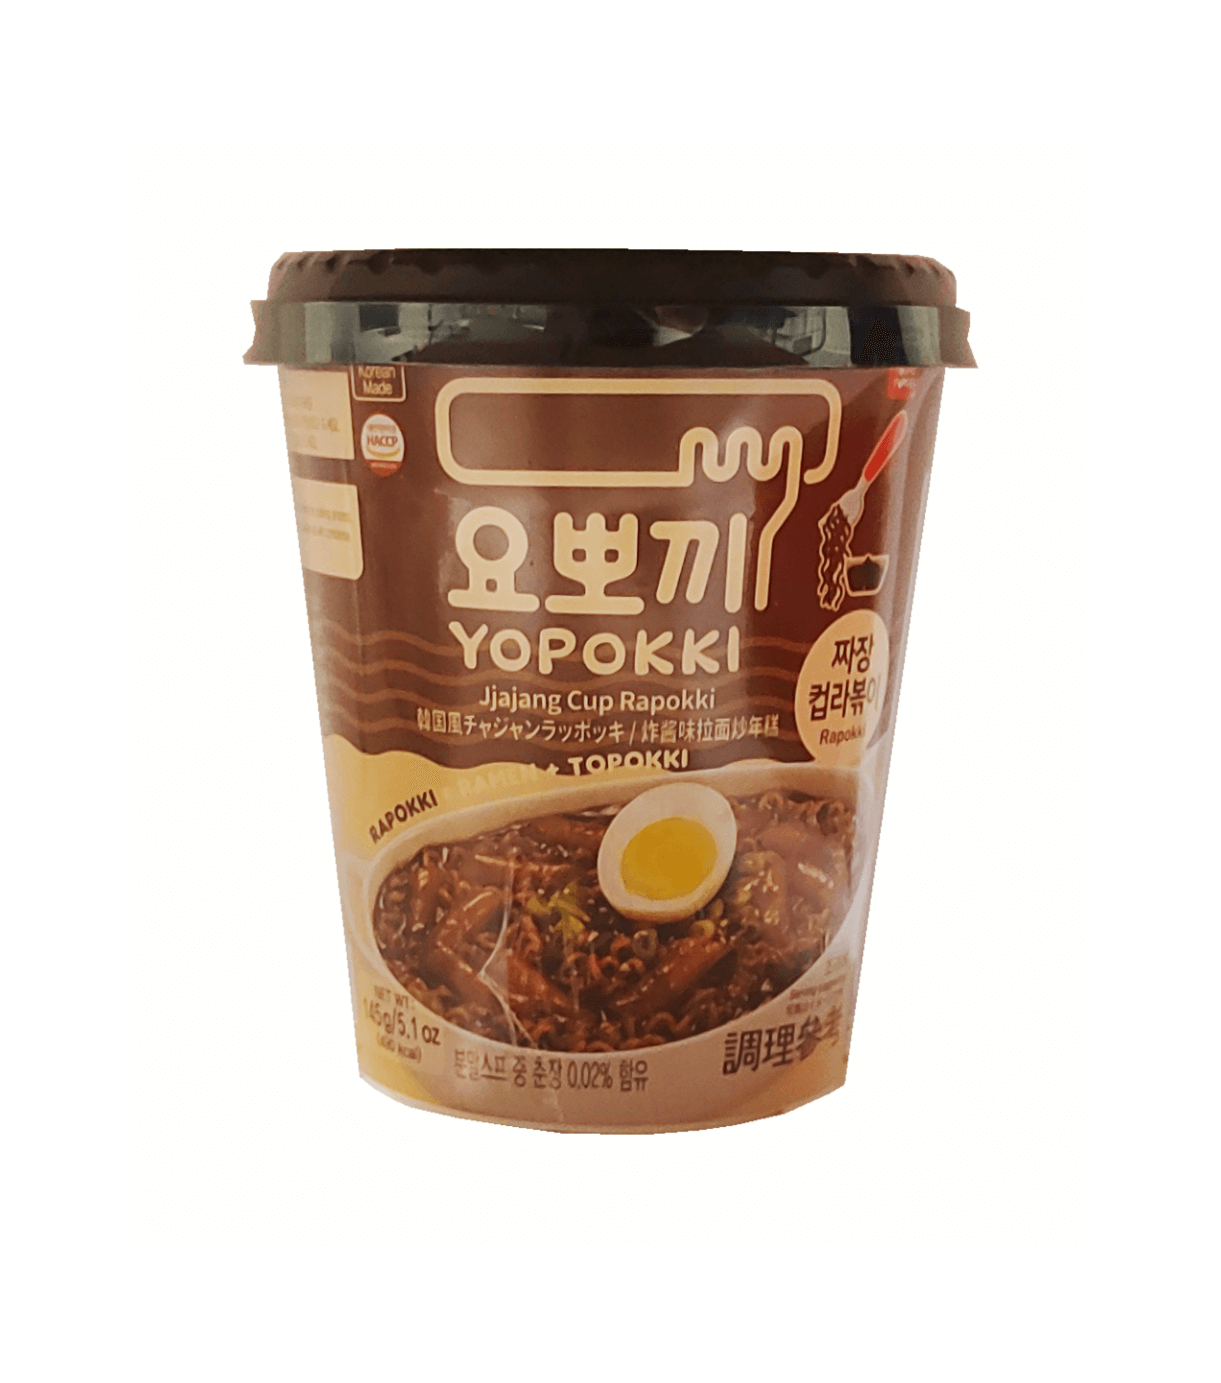 Riskaka / Ramen Cup Jjajang145g Yopokki Korea